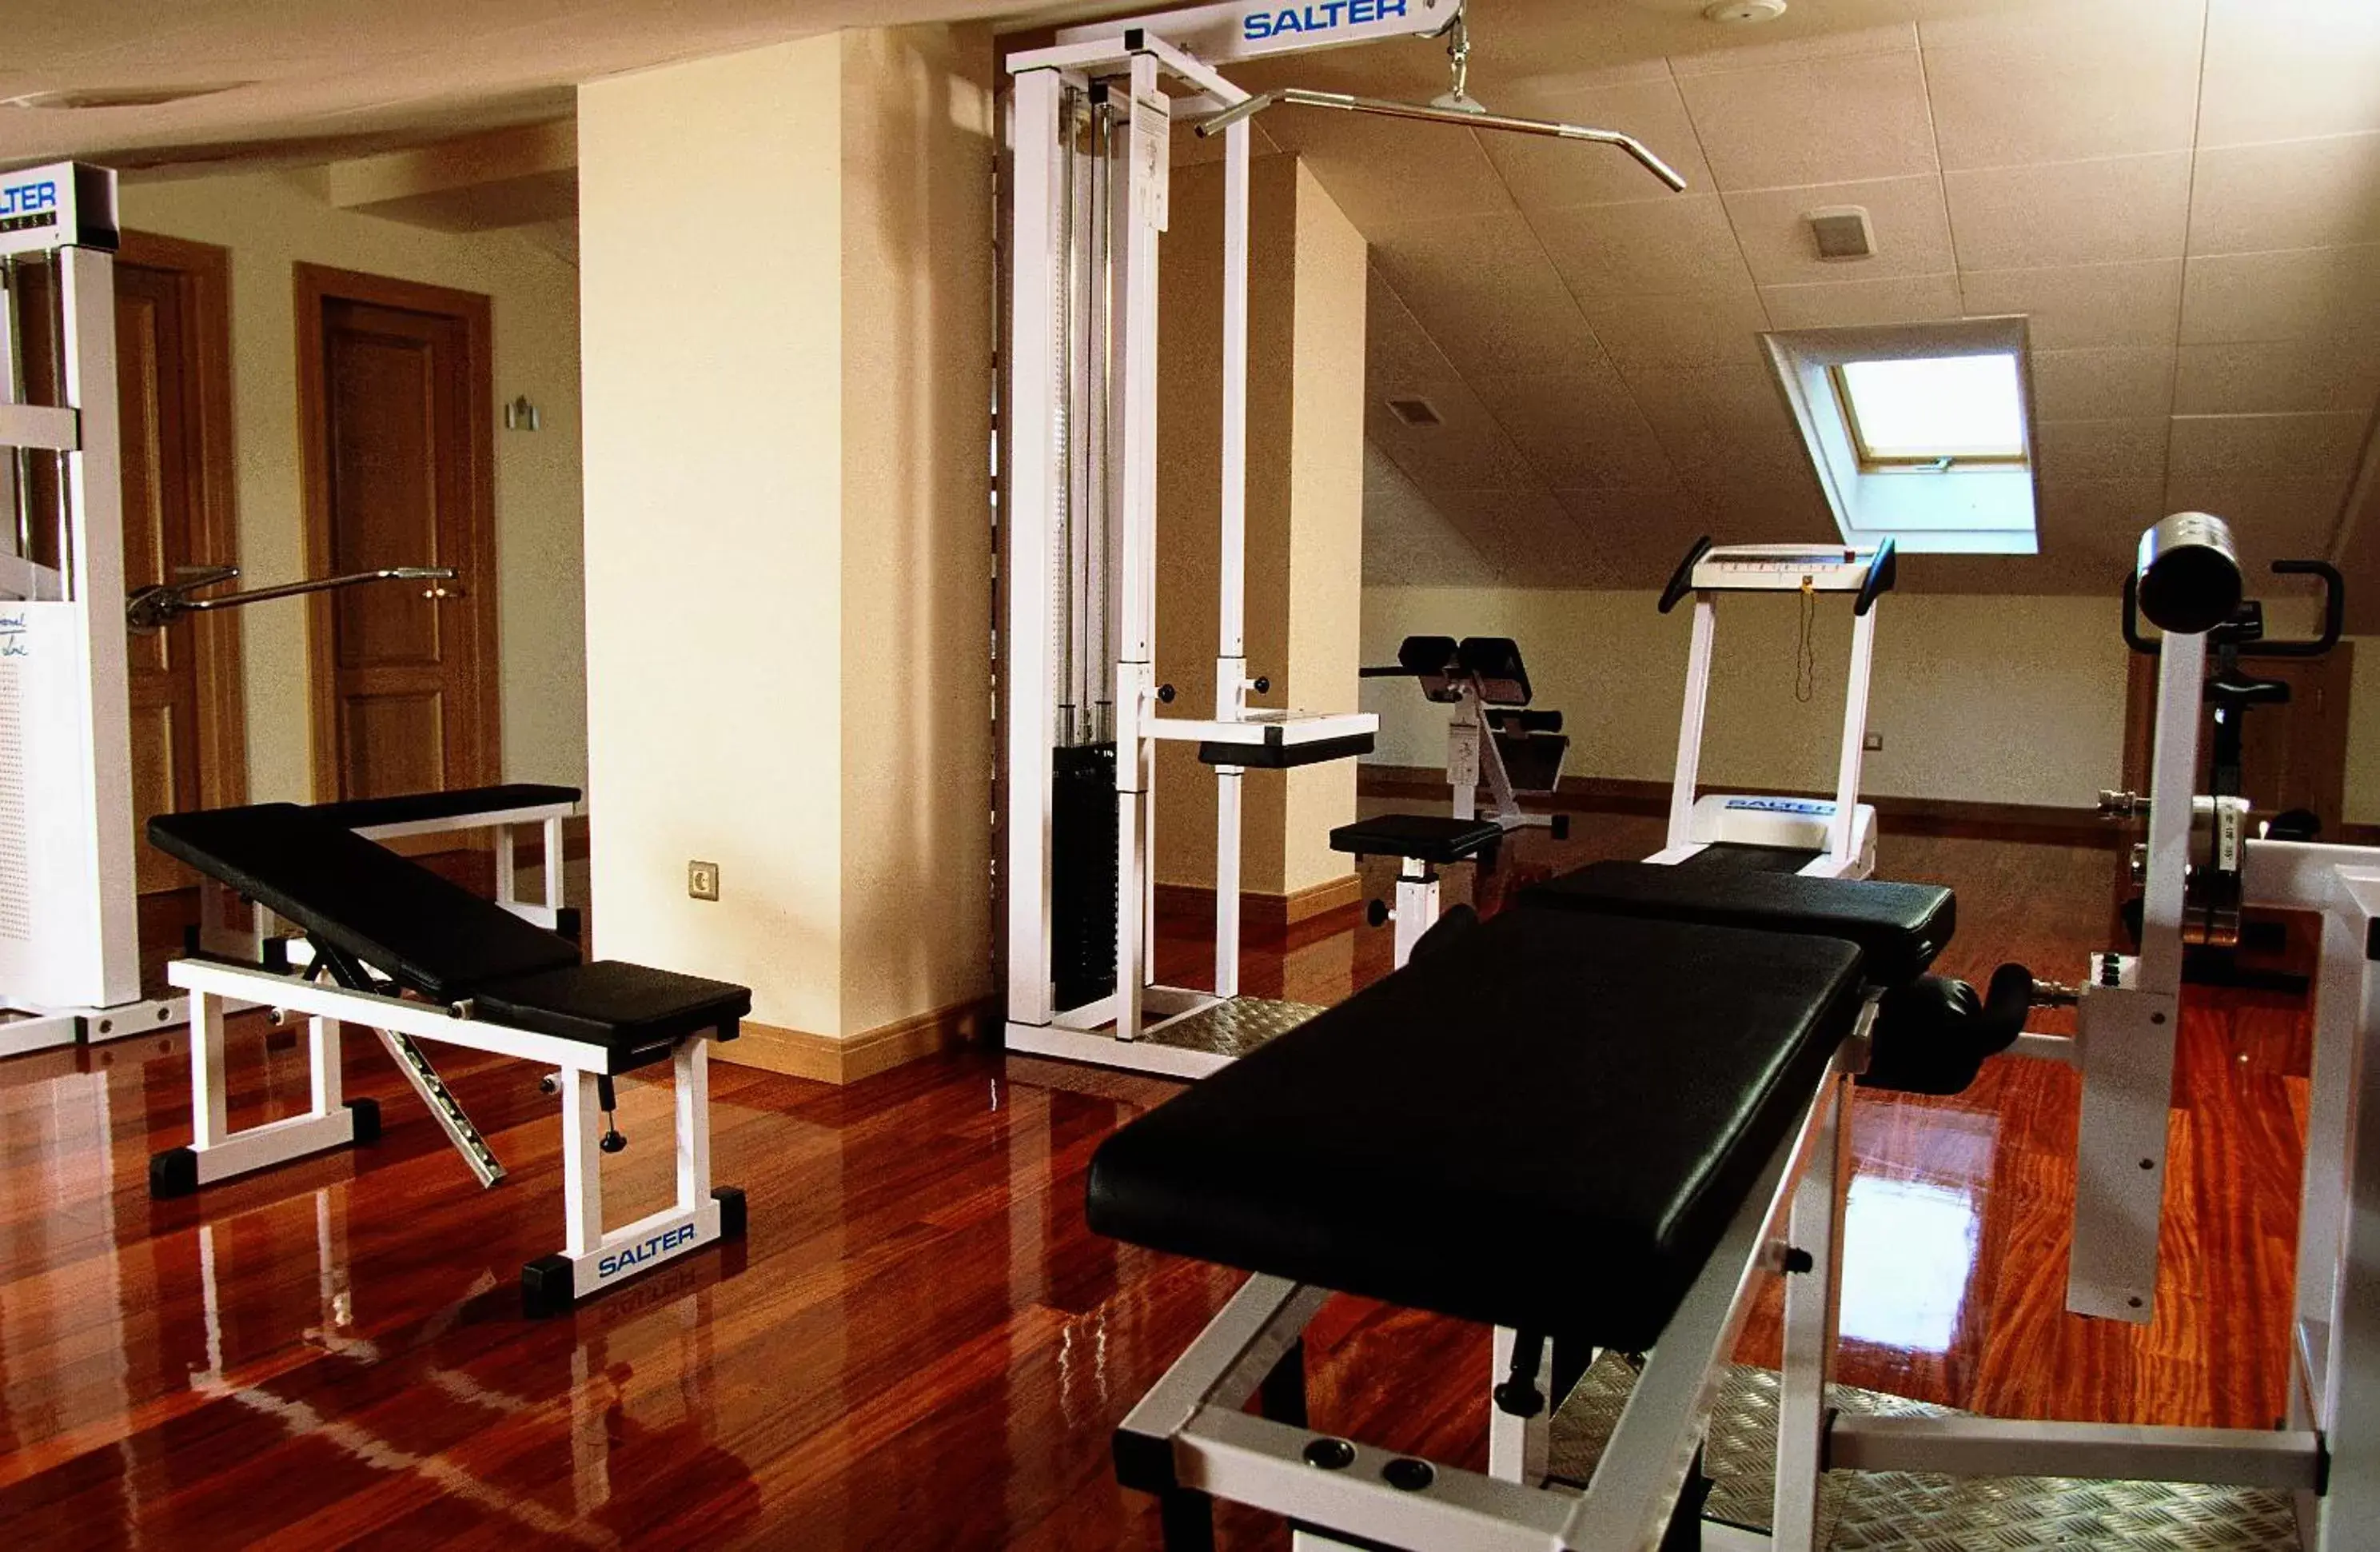 Fitness centre/facilities, Fitness Center/Facilities in Gran Hotel Los Abetos